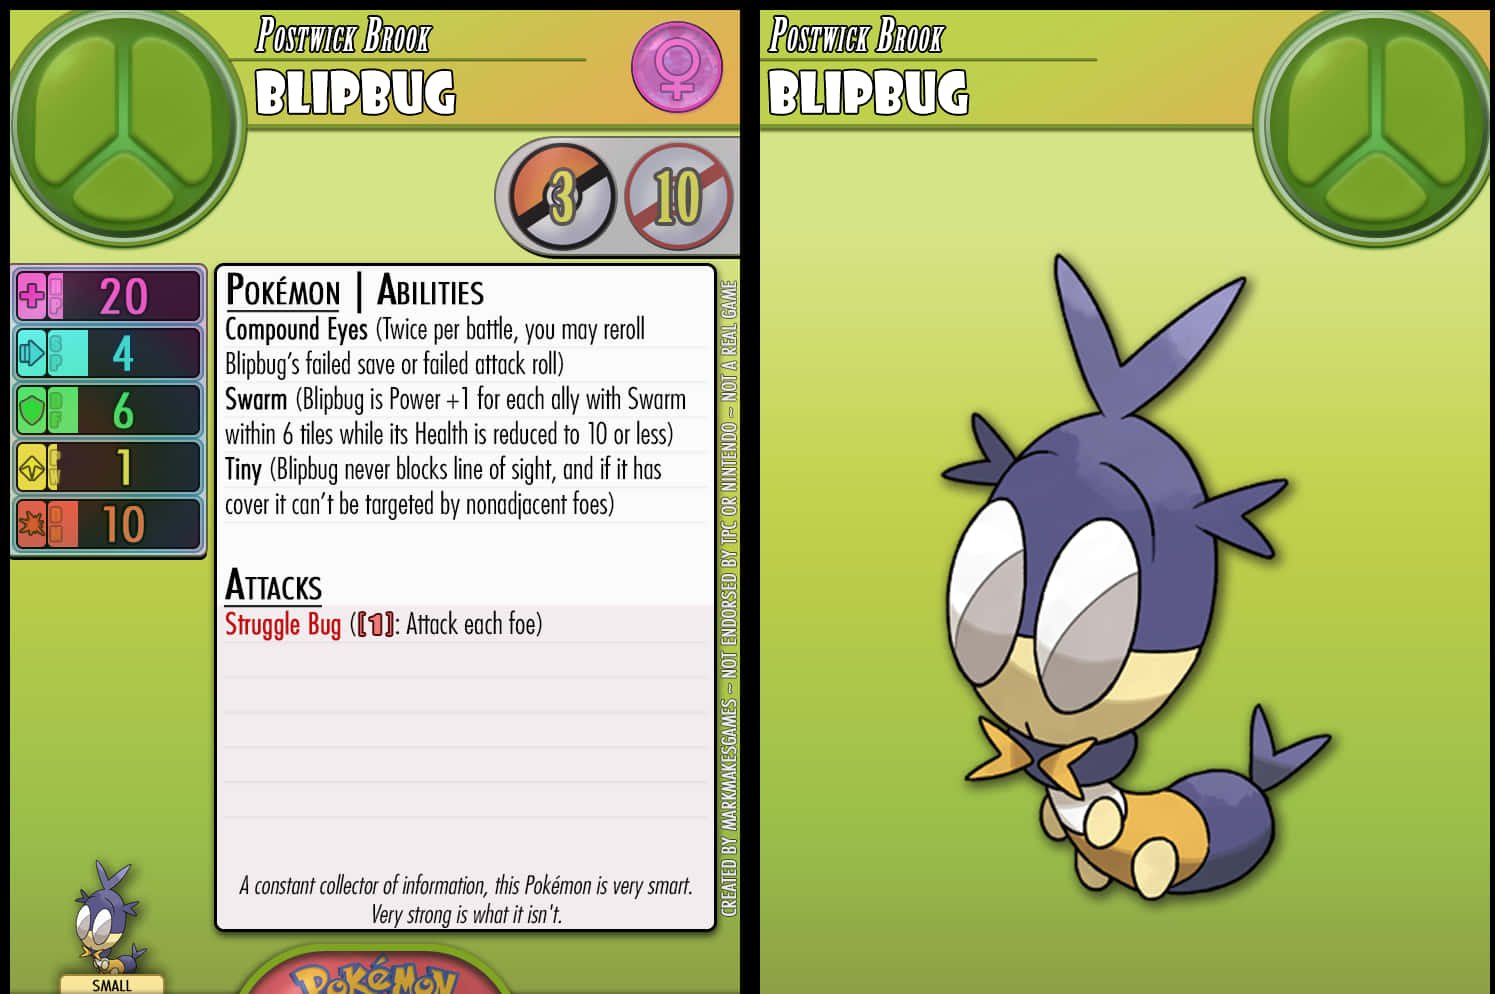 Pokémon Blipbug Abilities Wallpaper